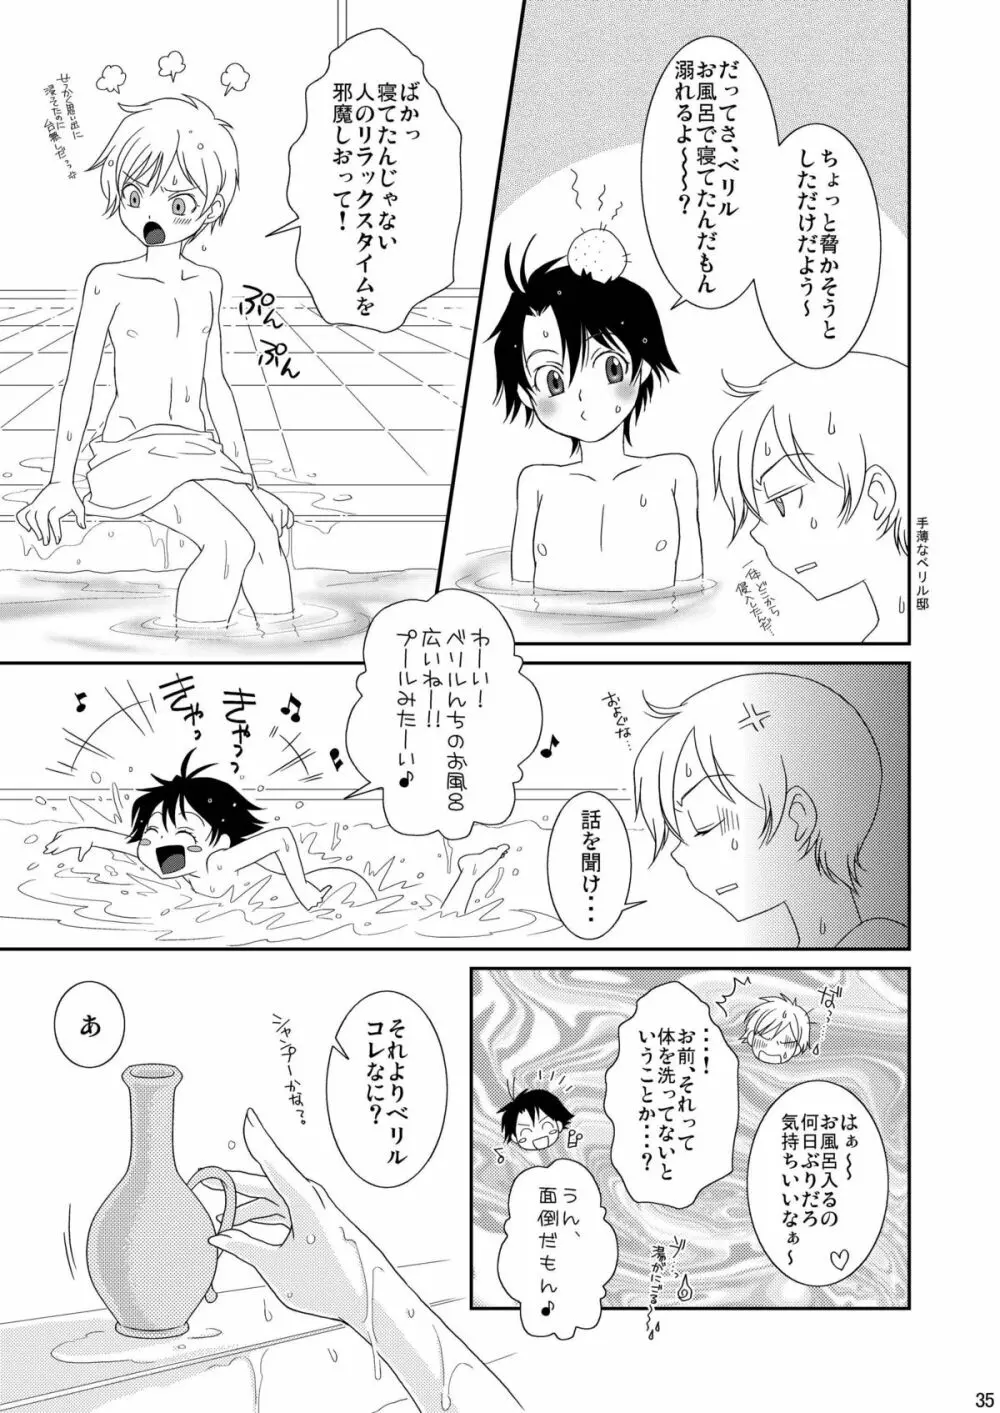 Re: ぷれい2 - page35